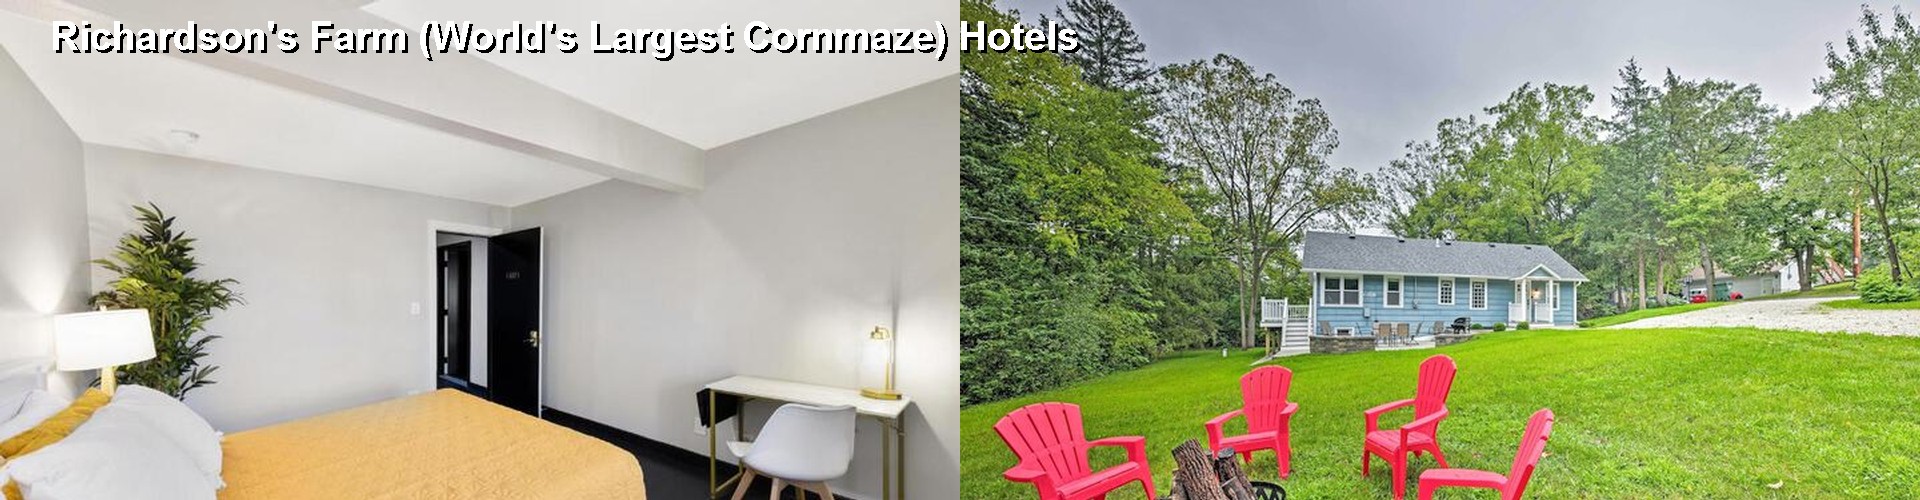 5 Best Hotels near Richardson's Farm (World's Largest Cornmaze)